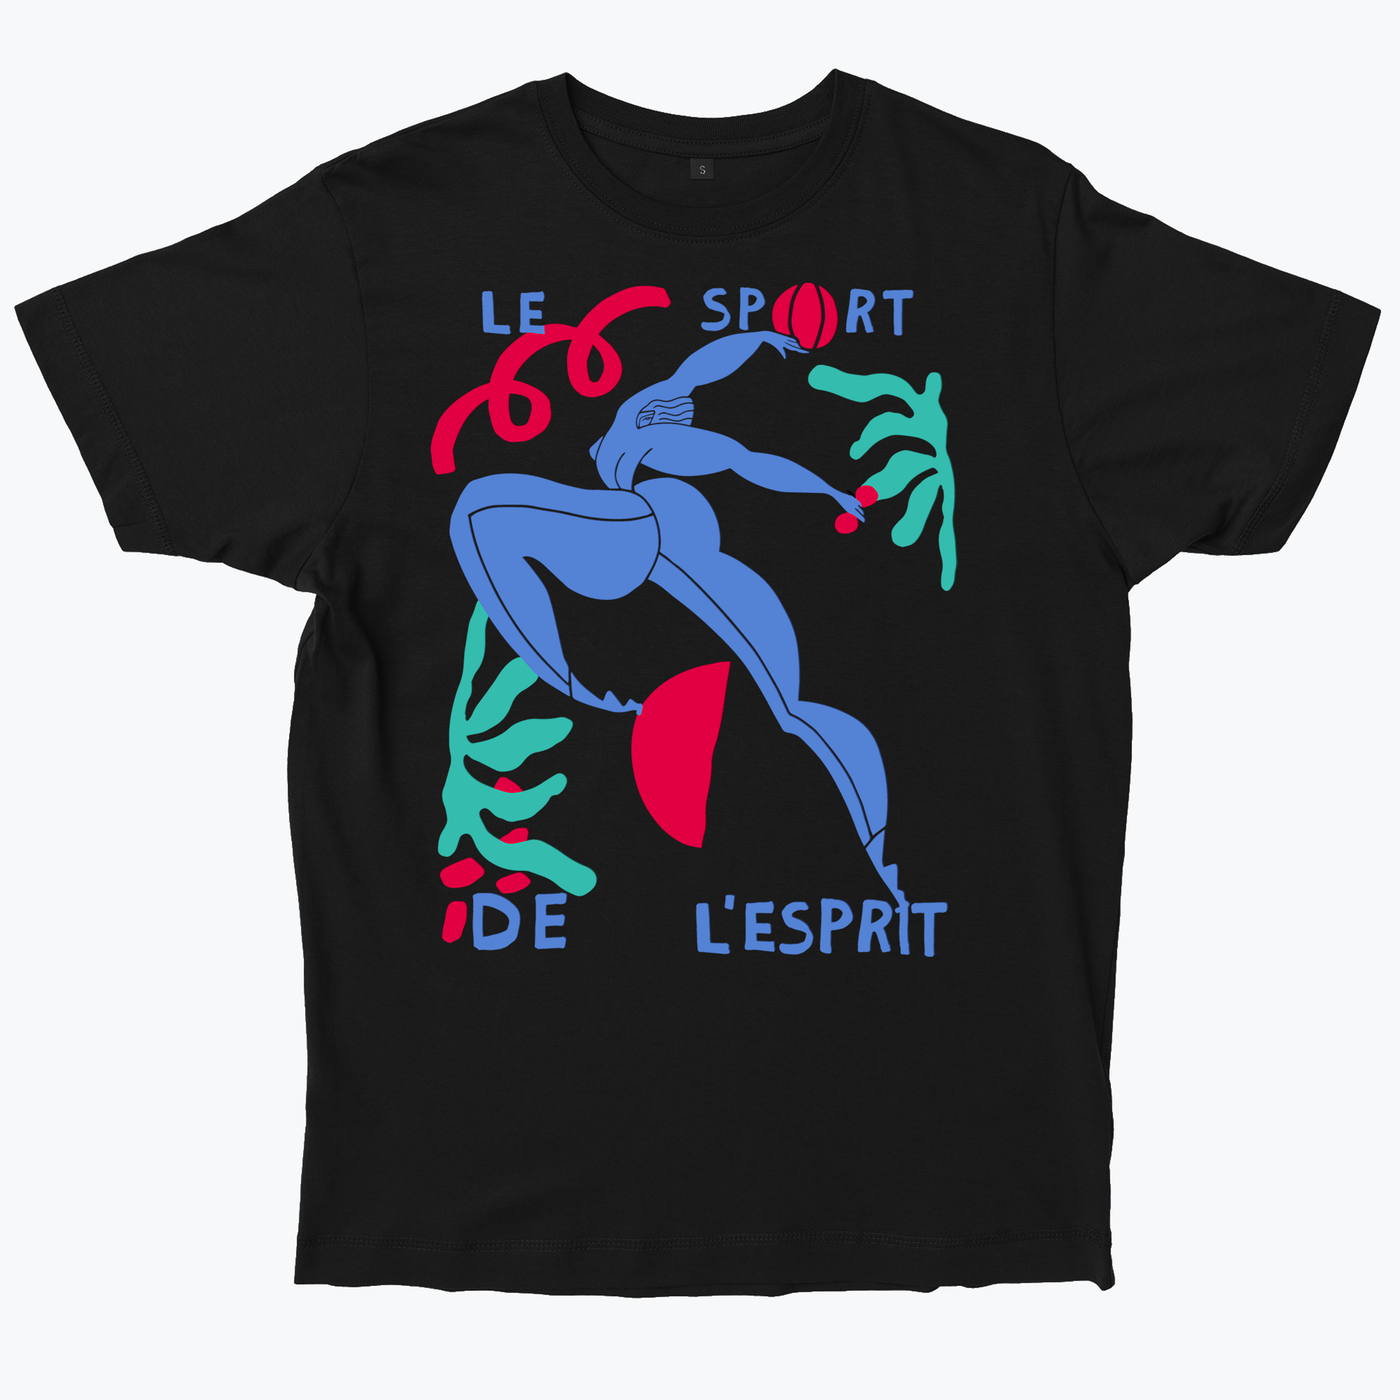 Kelly Anna 'Le Sport' T-shirt